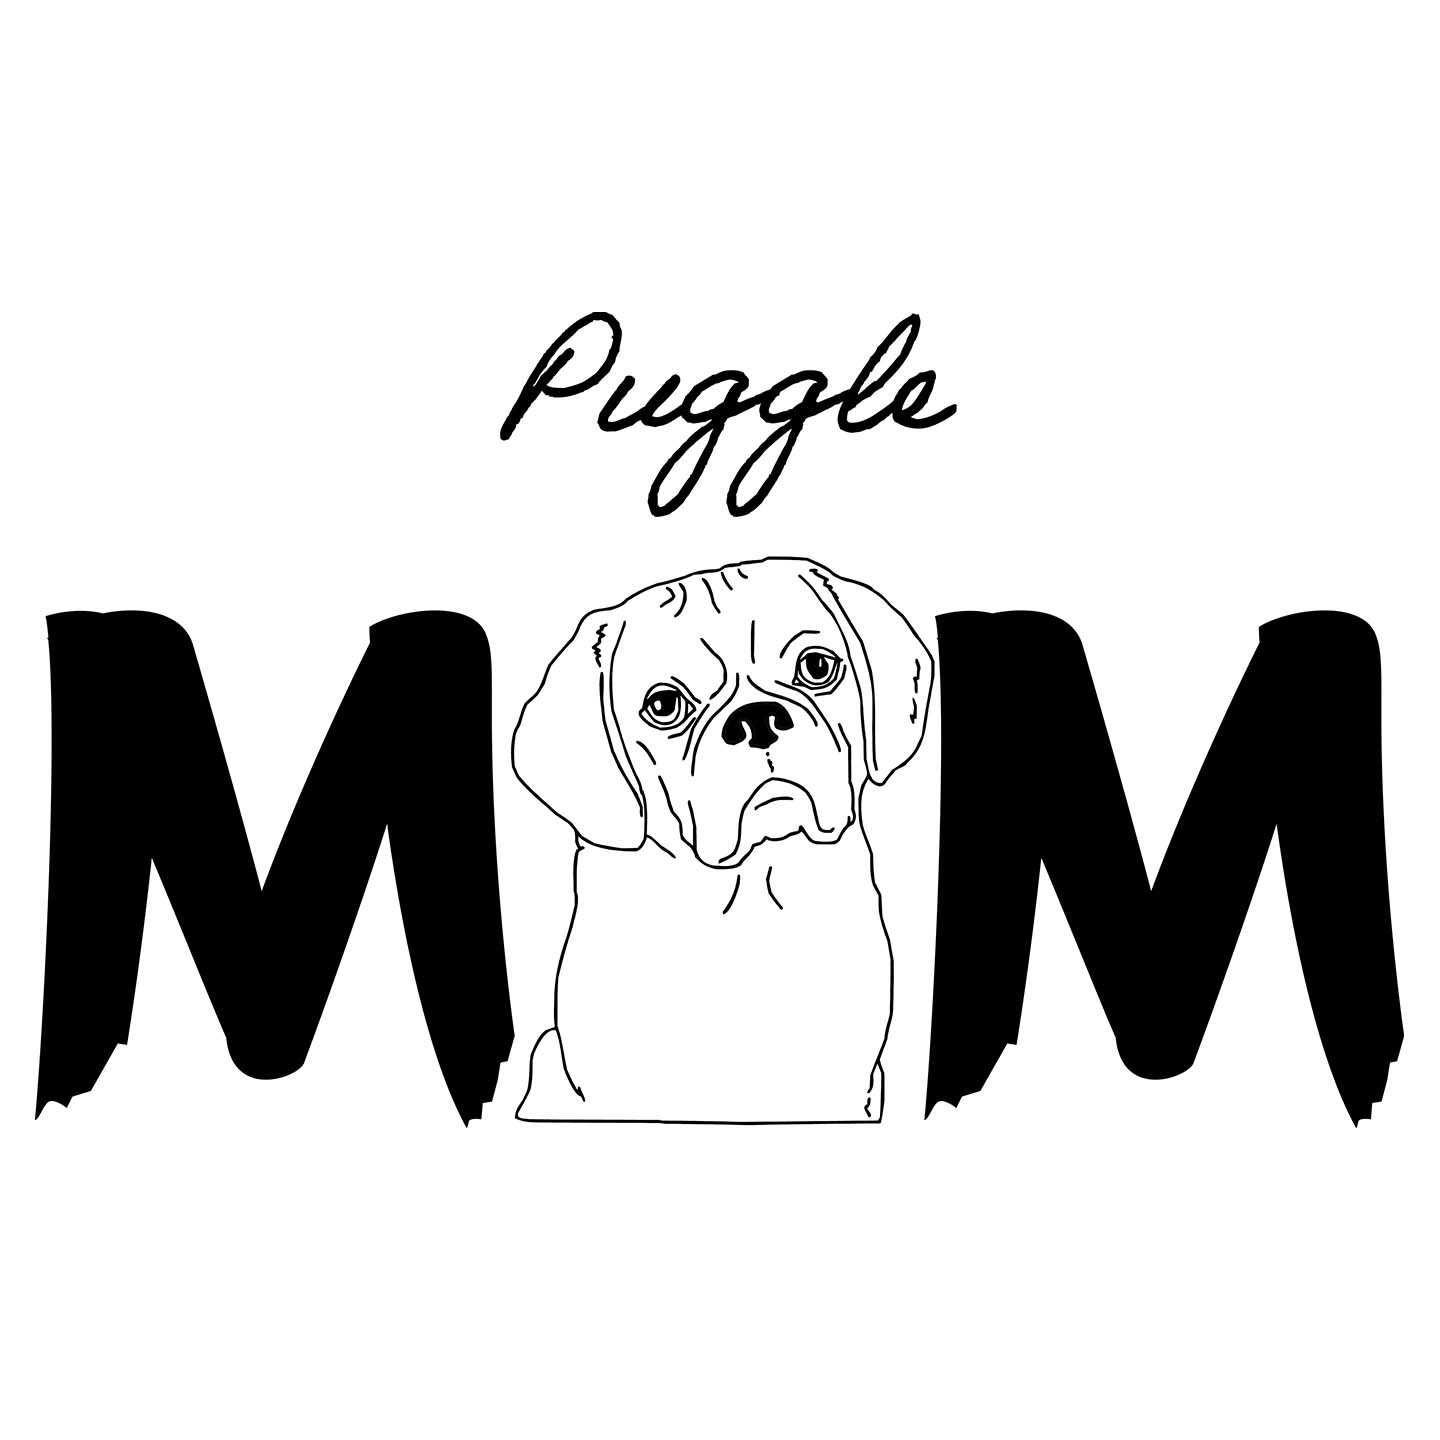 Puggle Breed Mom - Women's V-Neck T-Shirt